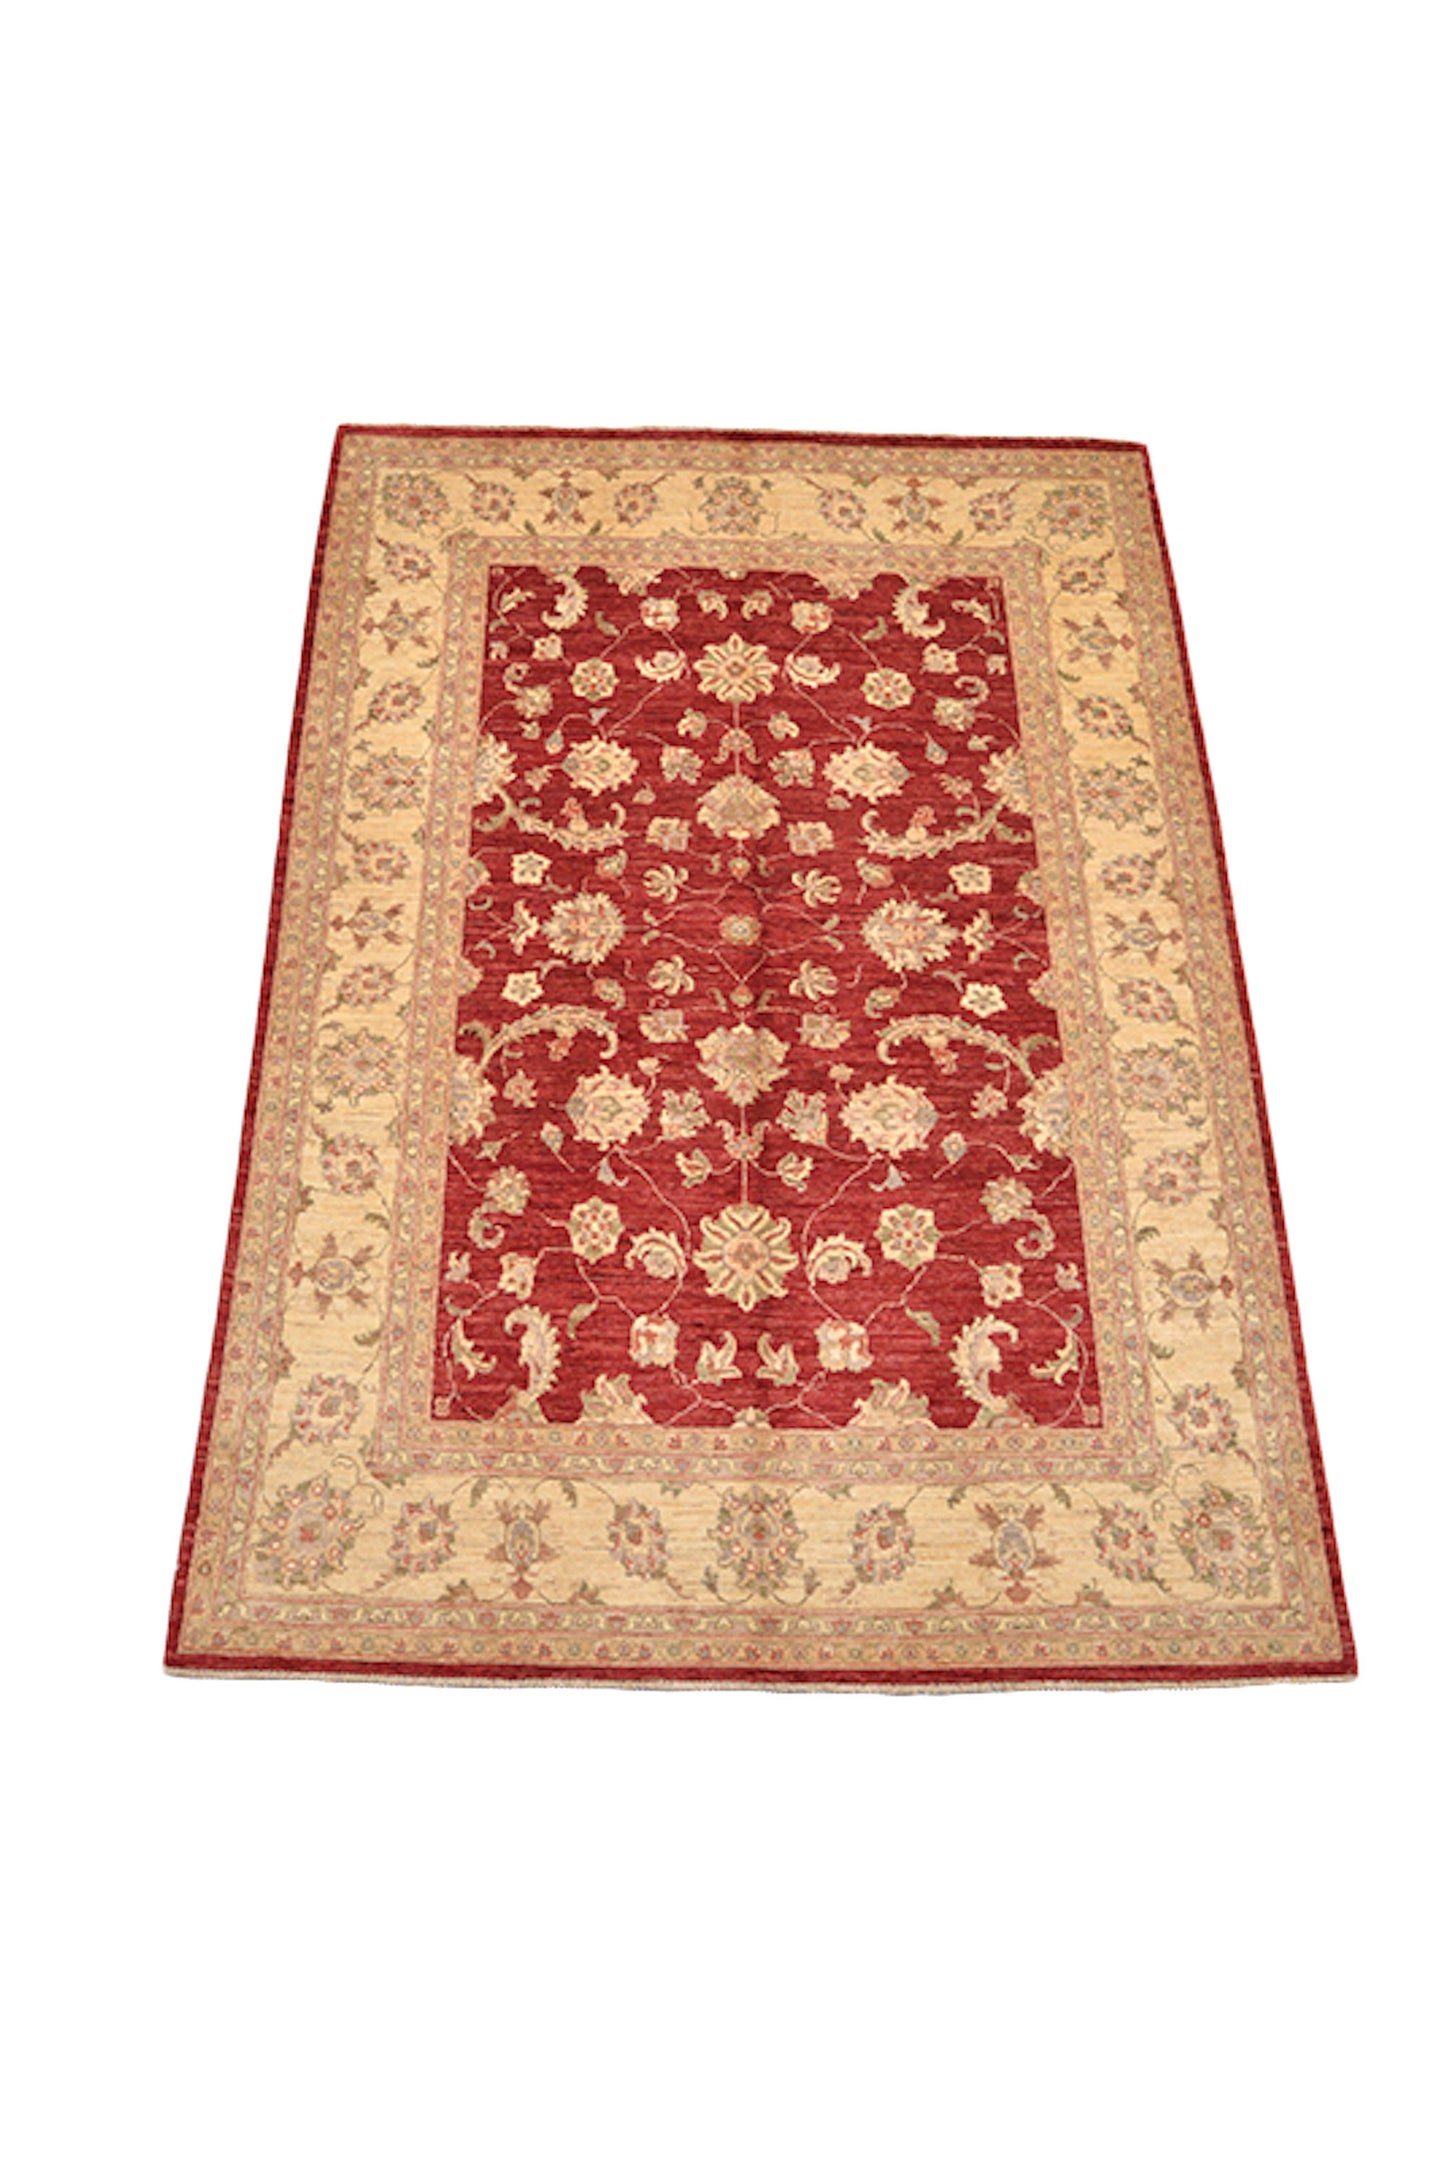 6 x 9 Feet Red Gold Floral Rug | Handmade Area Rug | Oriental Persian Caucasian Rug | Living Room Rug | Wool Traditional Vintage